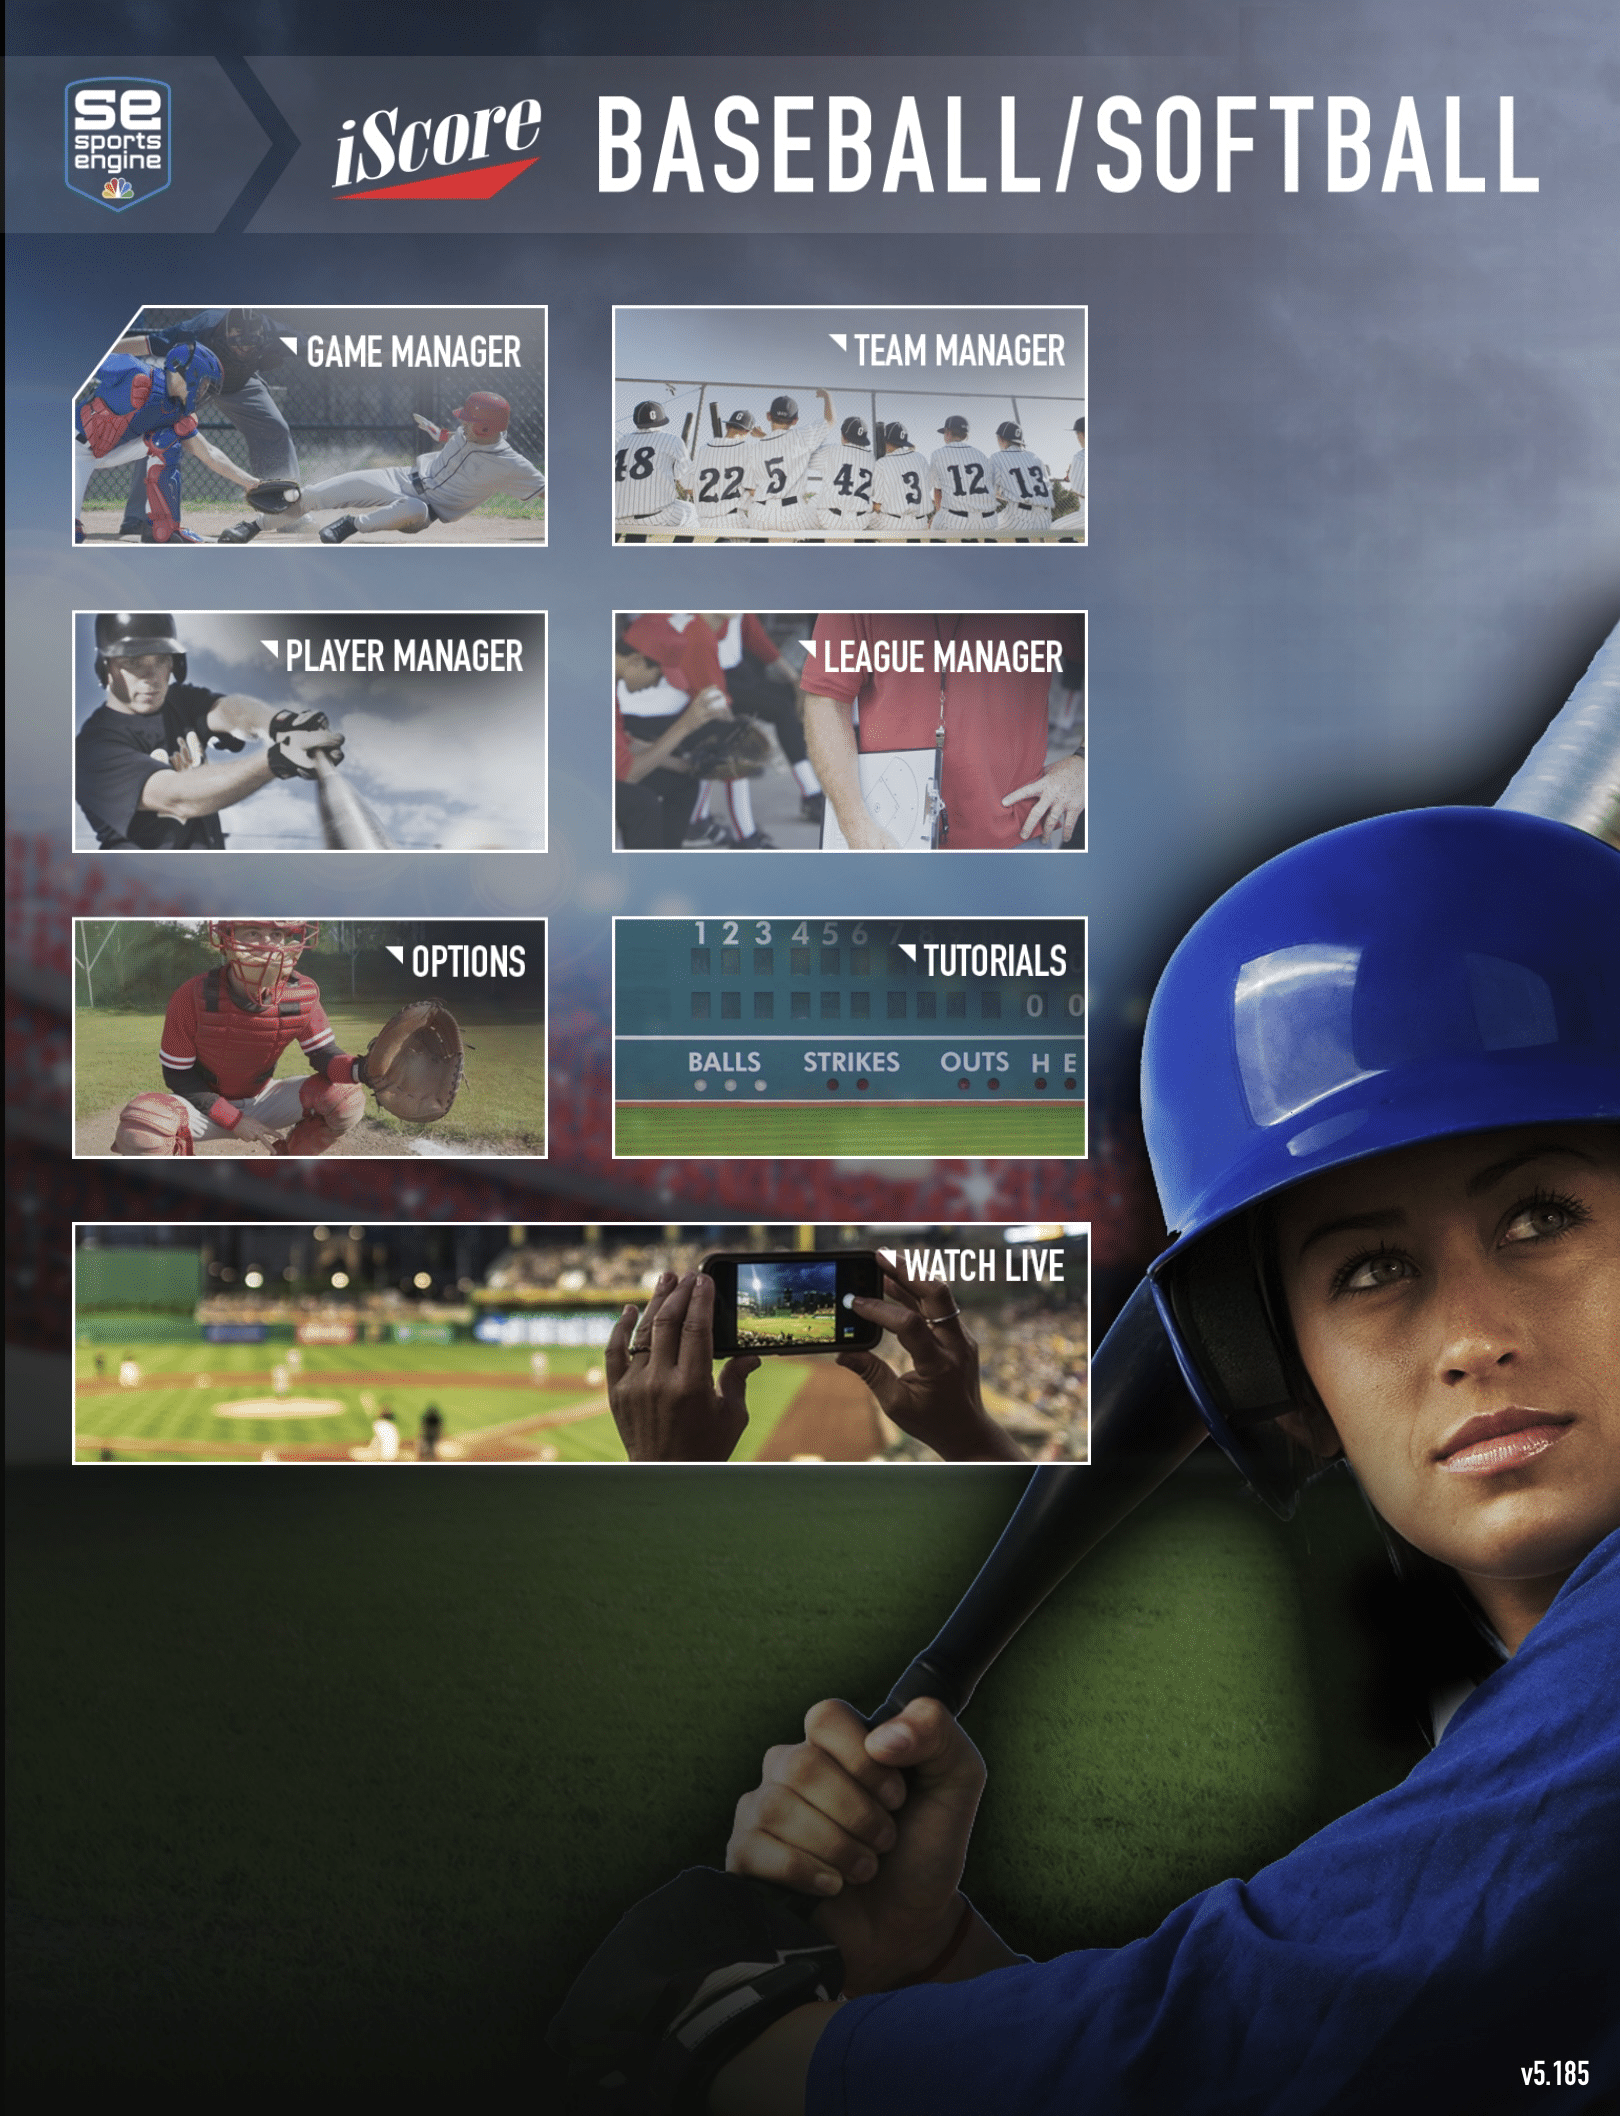 The iScore baseball scorekeeping app main dashboard.